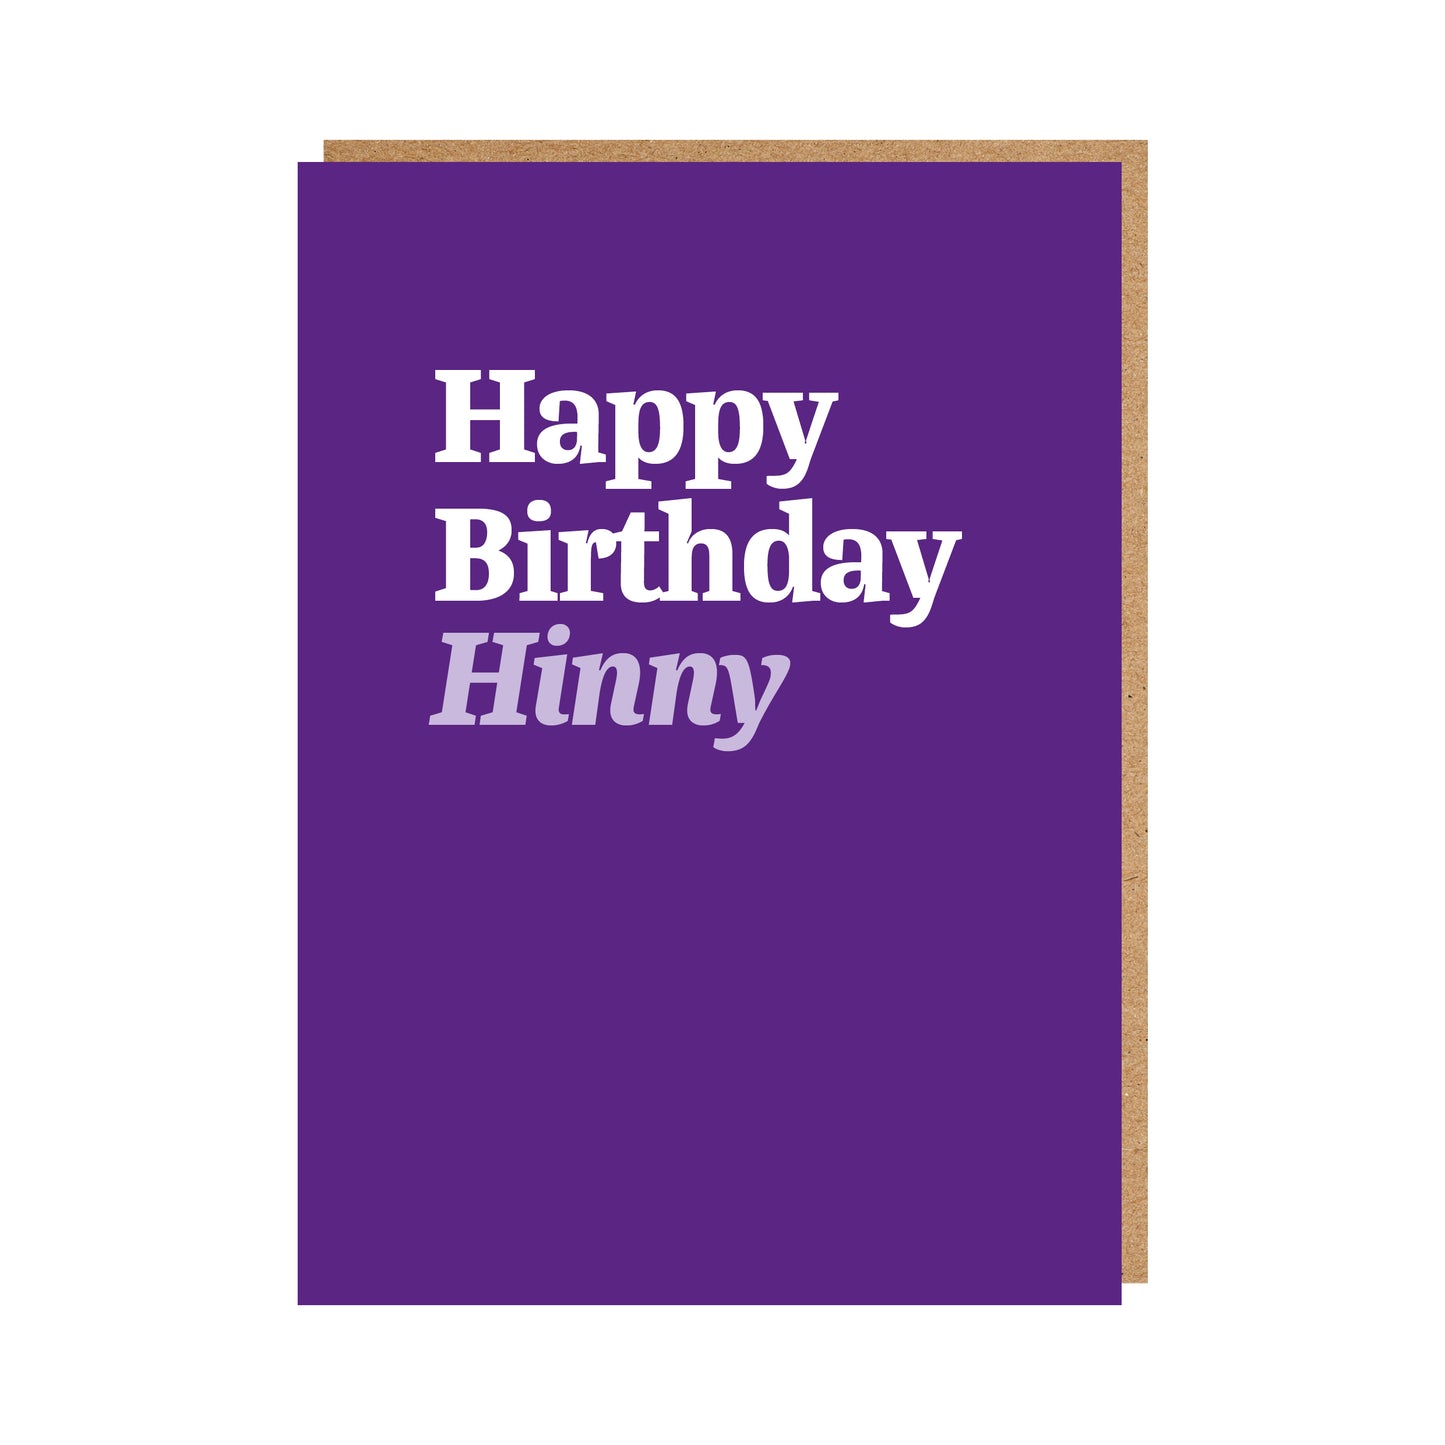 Geordie Birthday Card text reads "Happy Birthday Hinny"